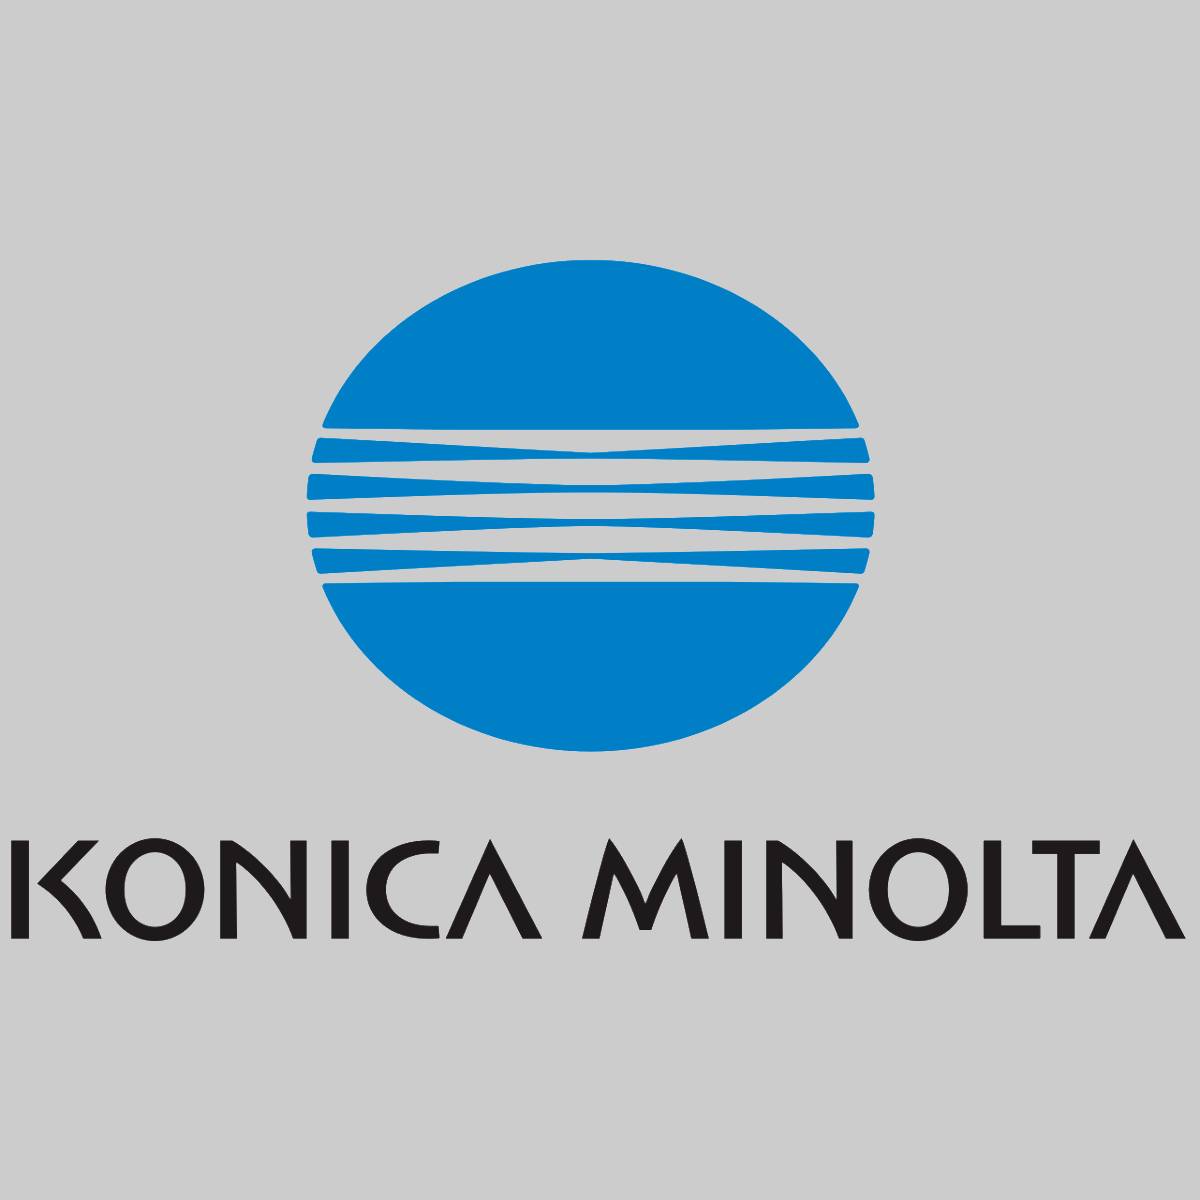 "Original Konica Minolta Waster Toner Container A50UR70115 Bizhub PRESS C1060